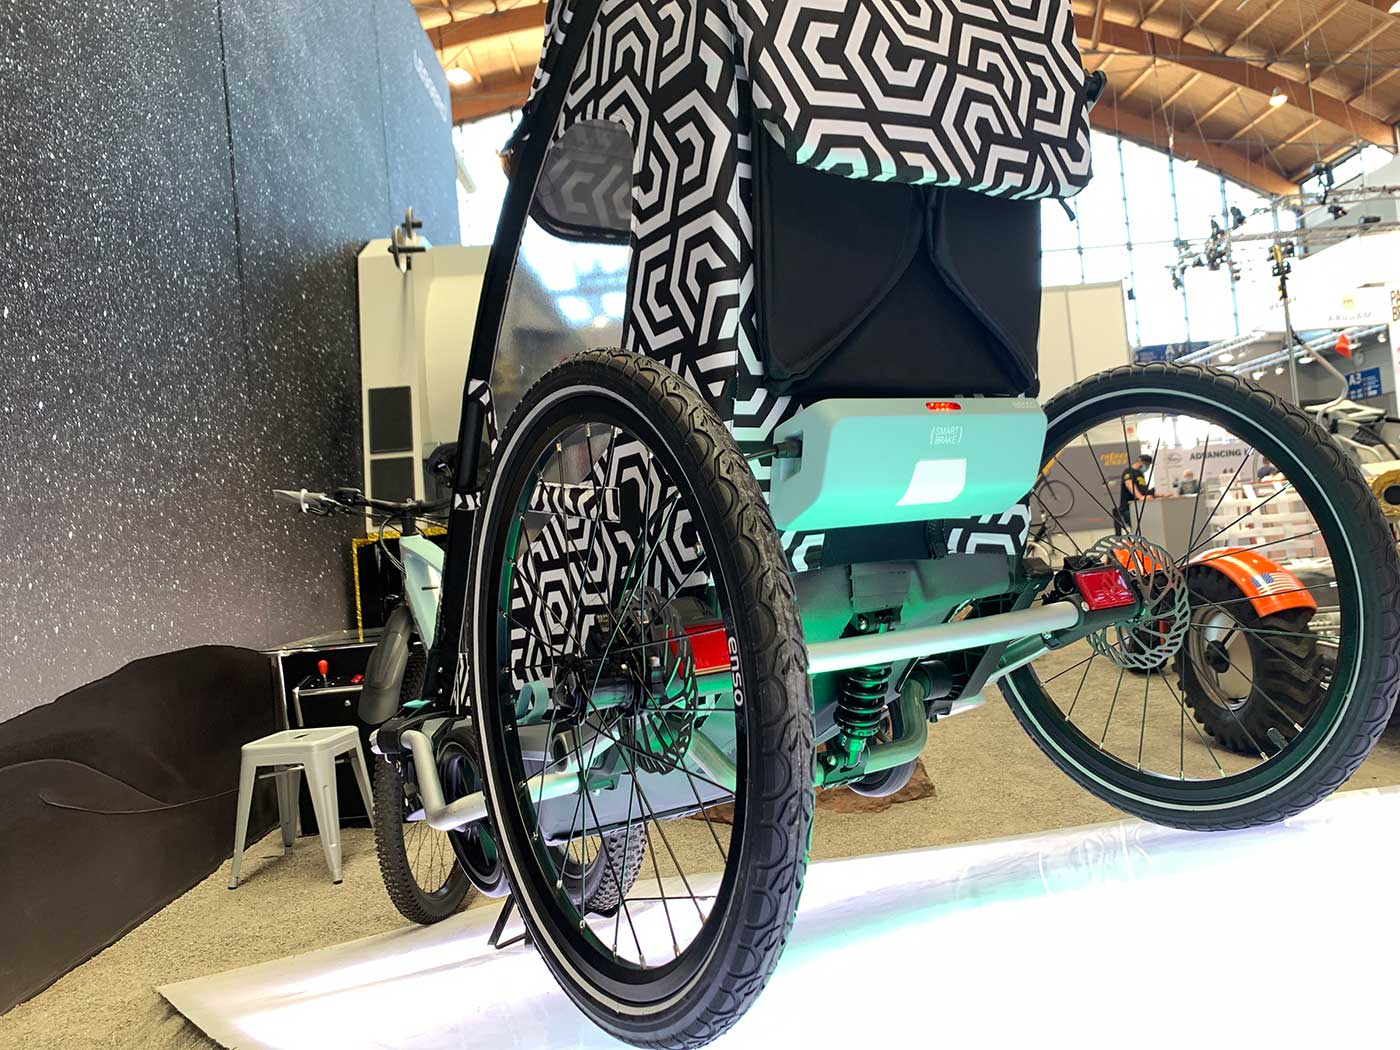 leggero overrun automatic braking prototype for kids bicycle trailers